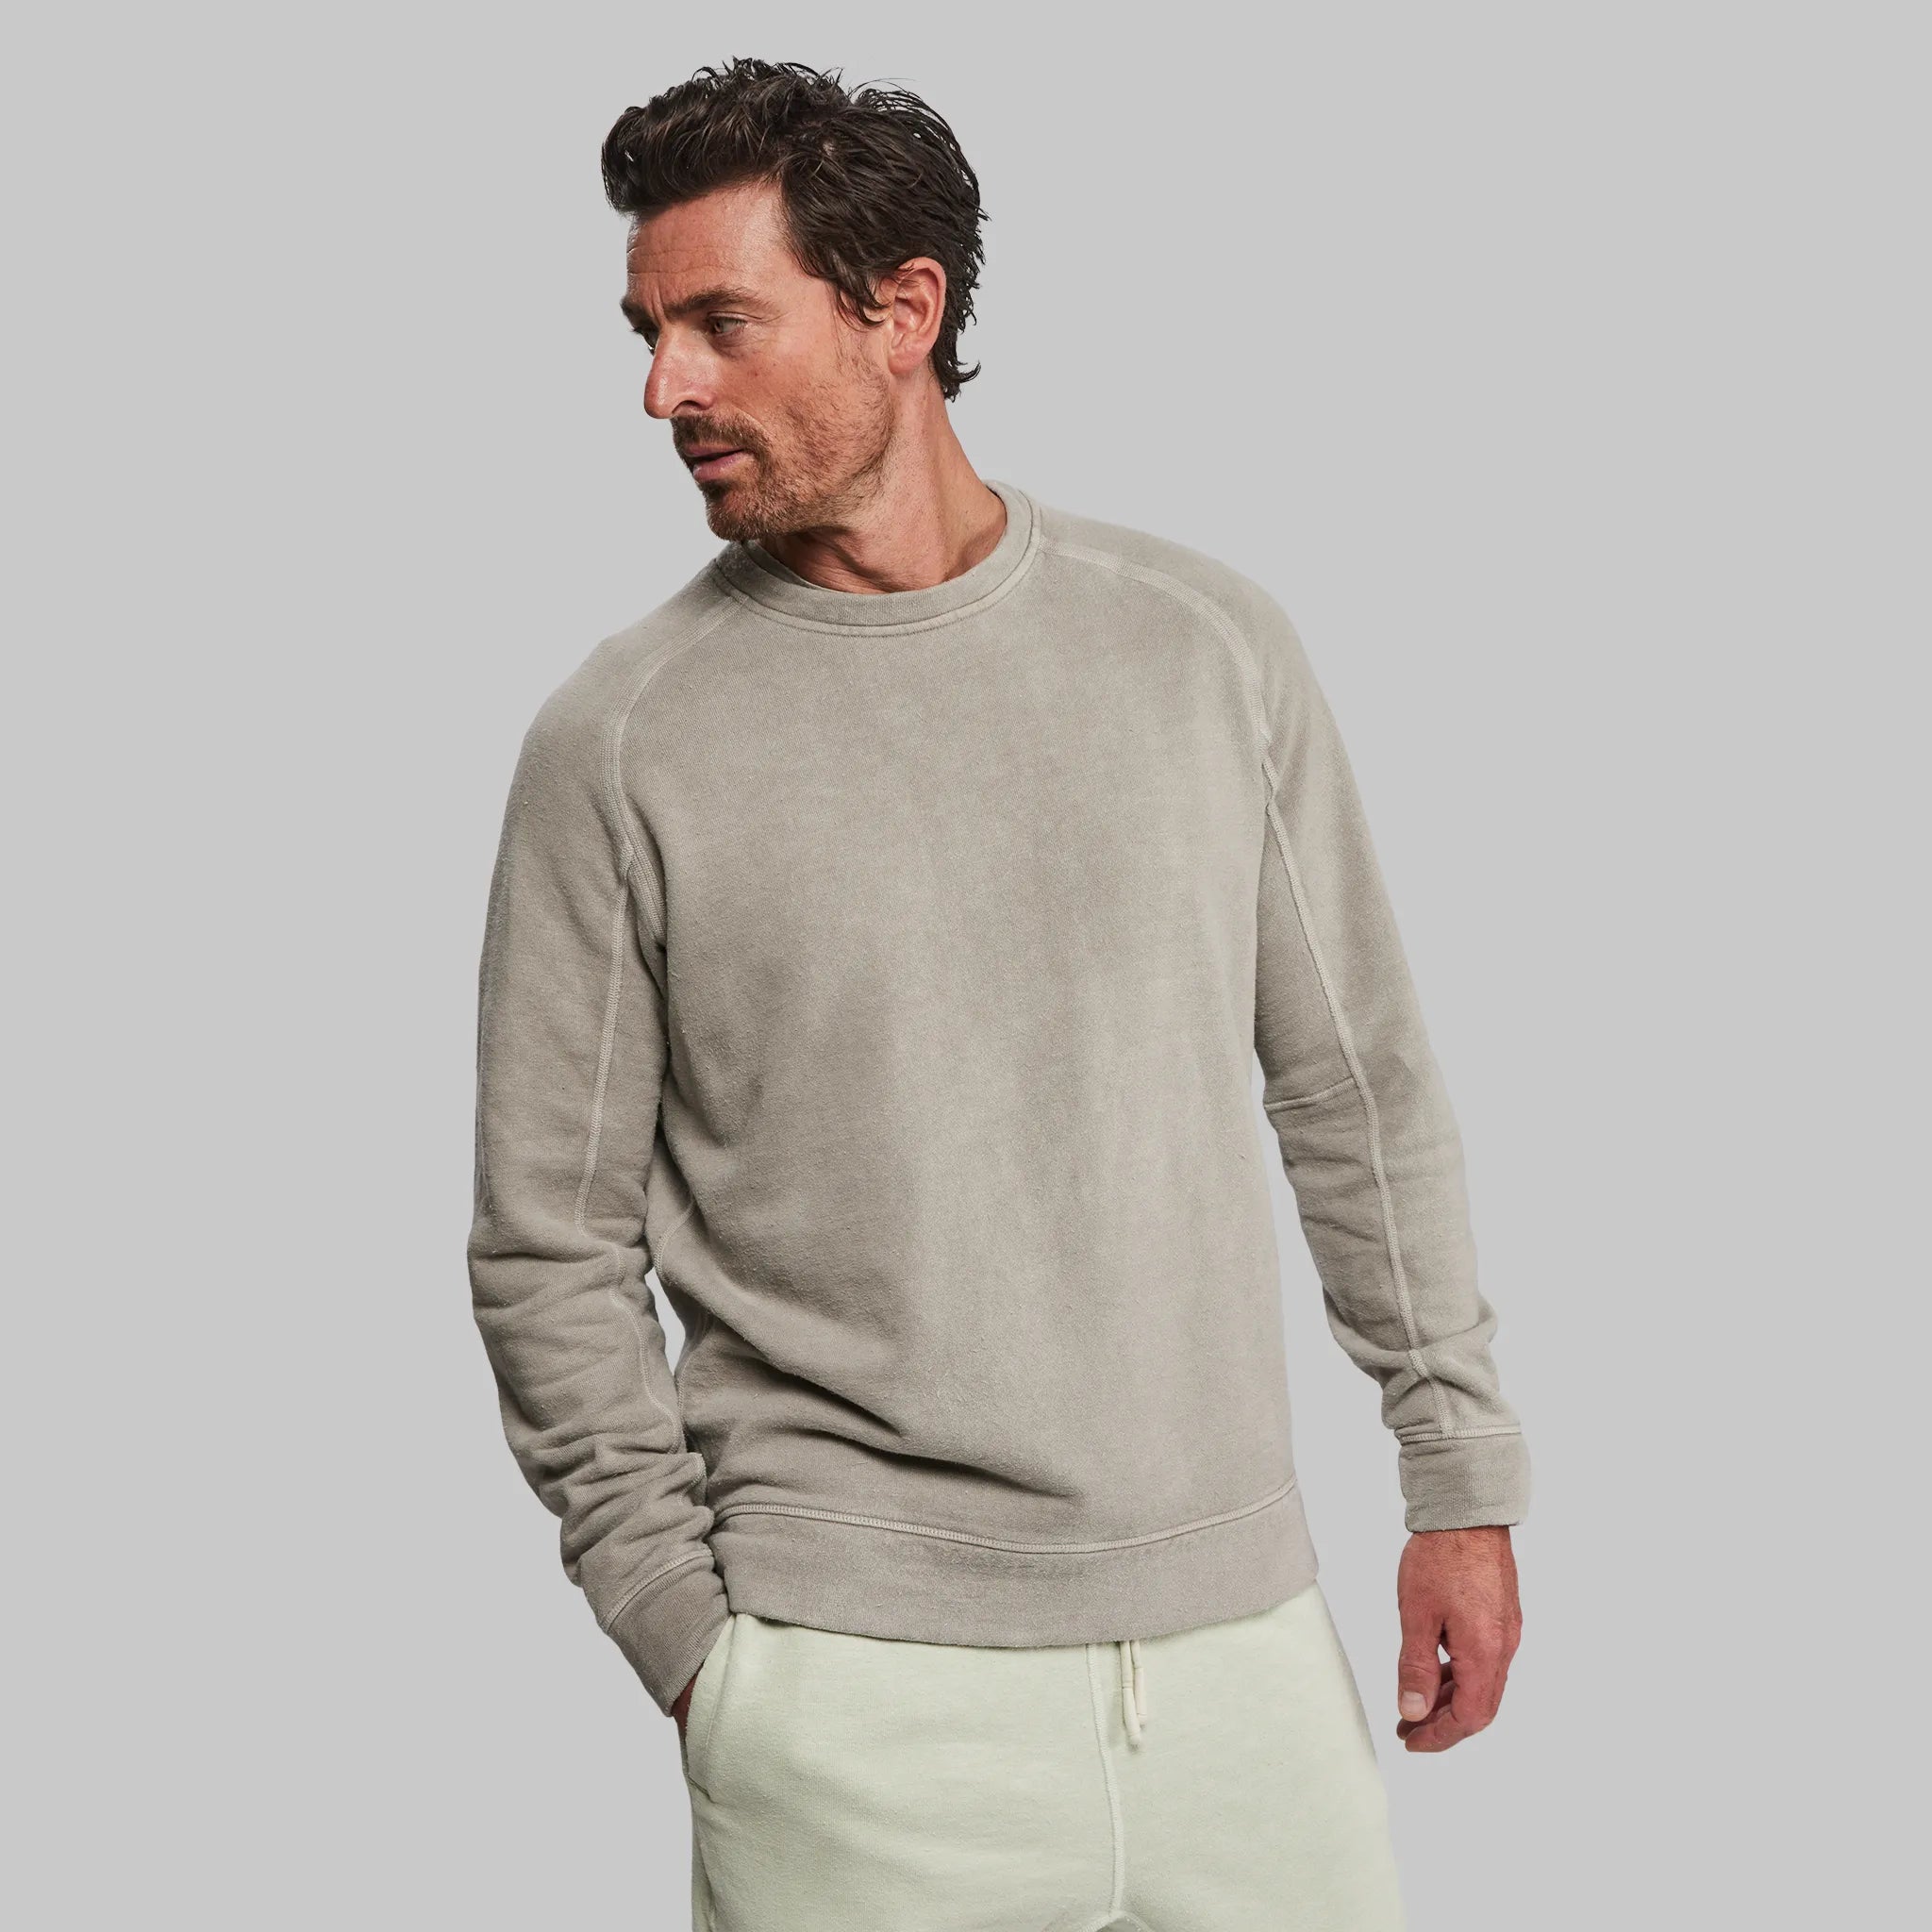 55% Hemp, 45% Organic Cotton Knit Sweater Fabric - Natural Color